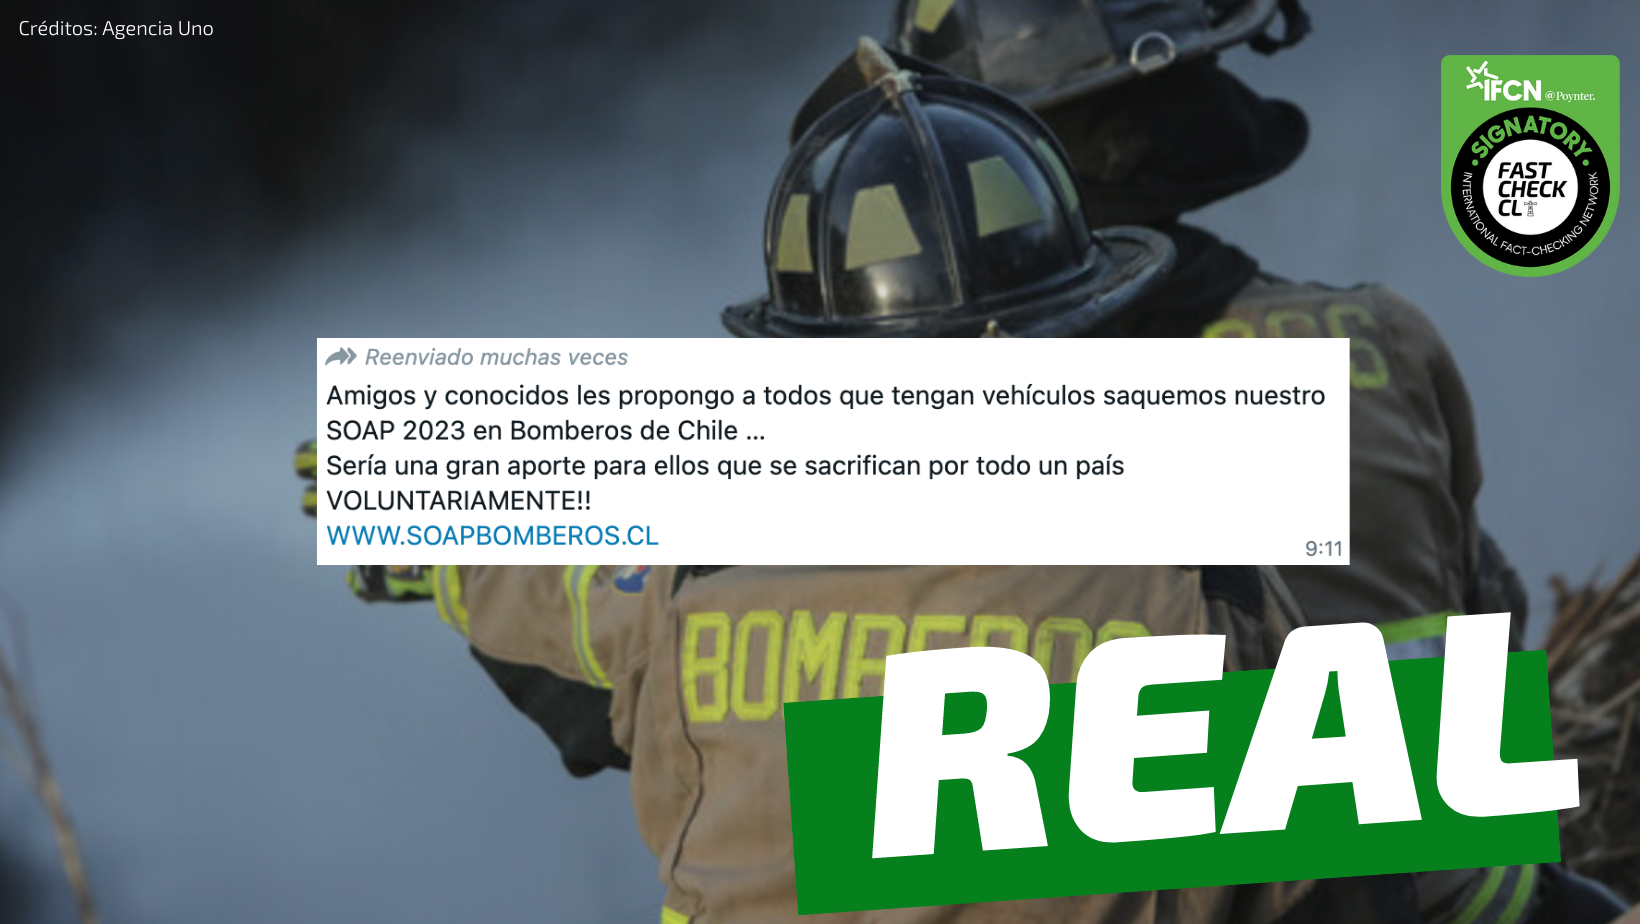 You are currently viewing (Whats App) “Saquemos nuestro SOAP 2023 en Bomberos de Chile en WWW.SOAPBOMBEROS.CL”: #Real